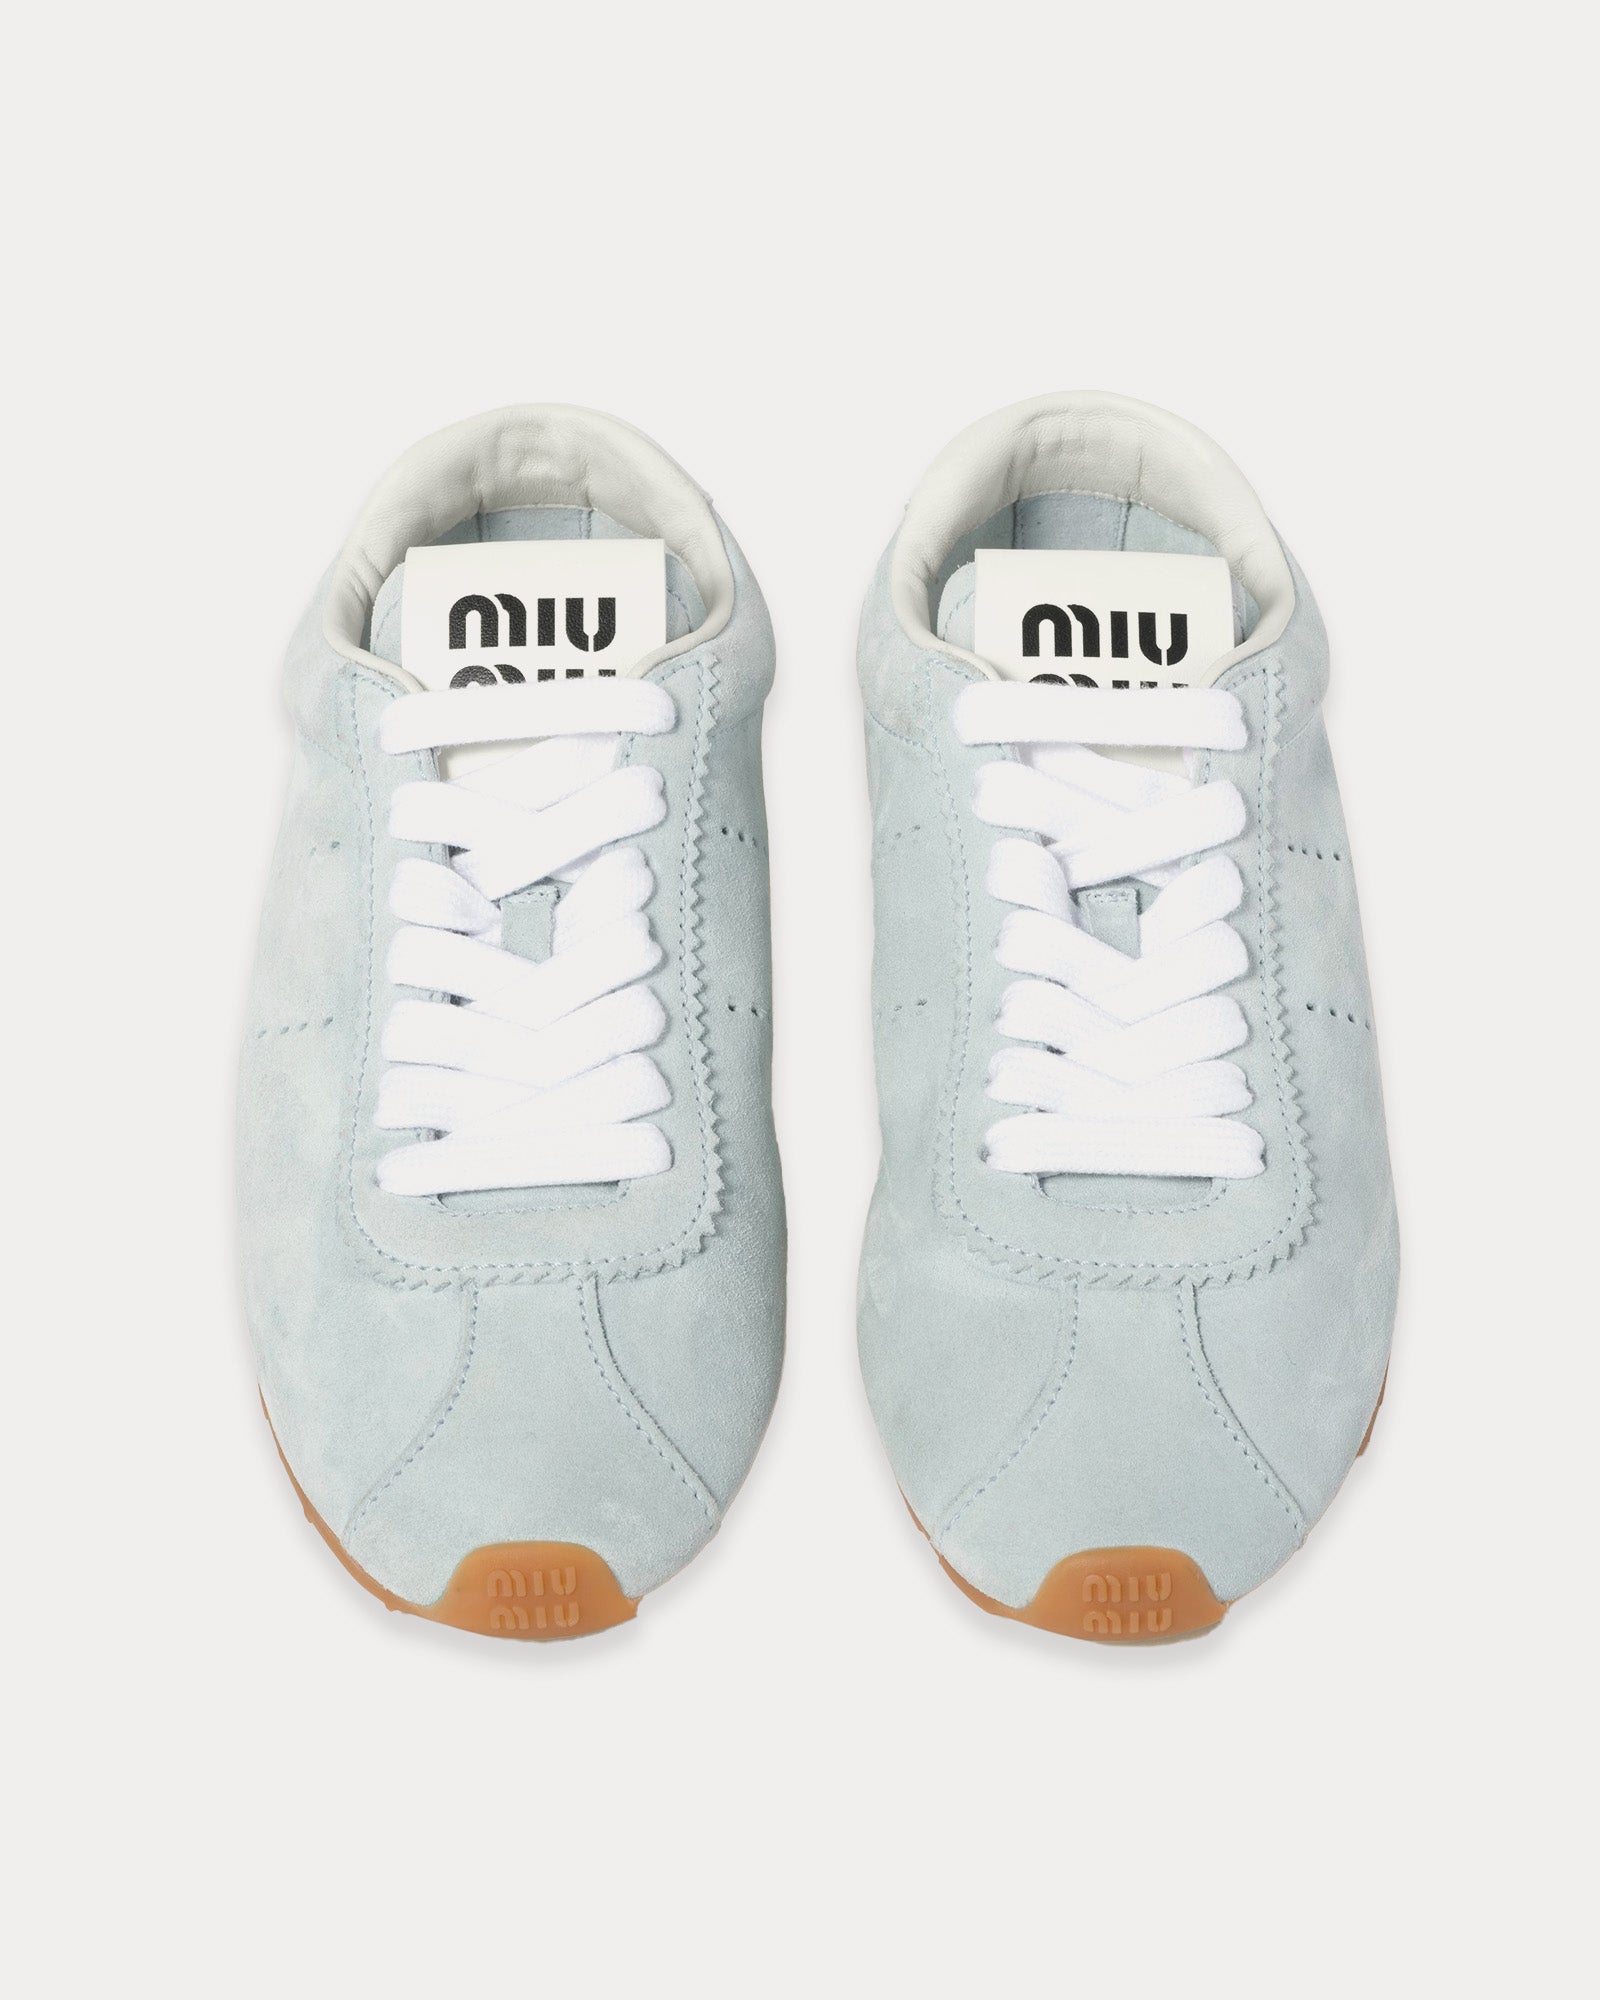 Miu Miu - Suede Light Blue Low Top Sneakers